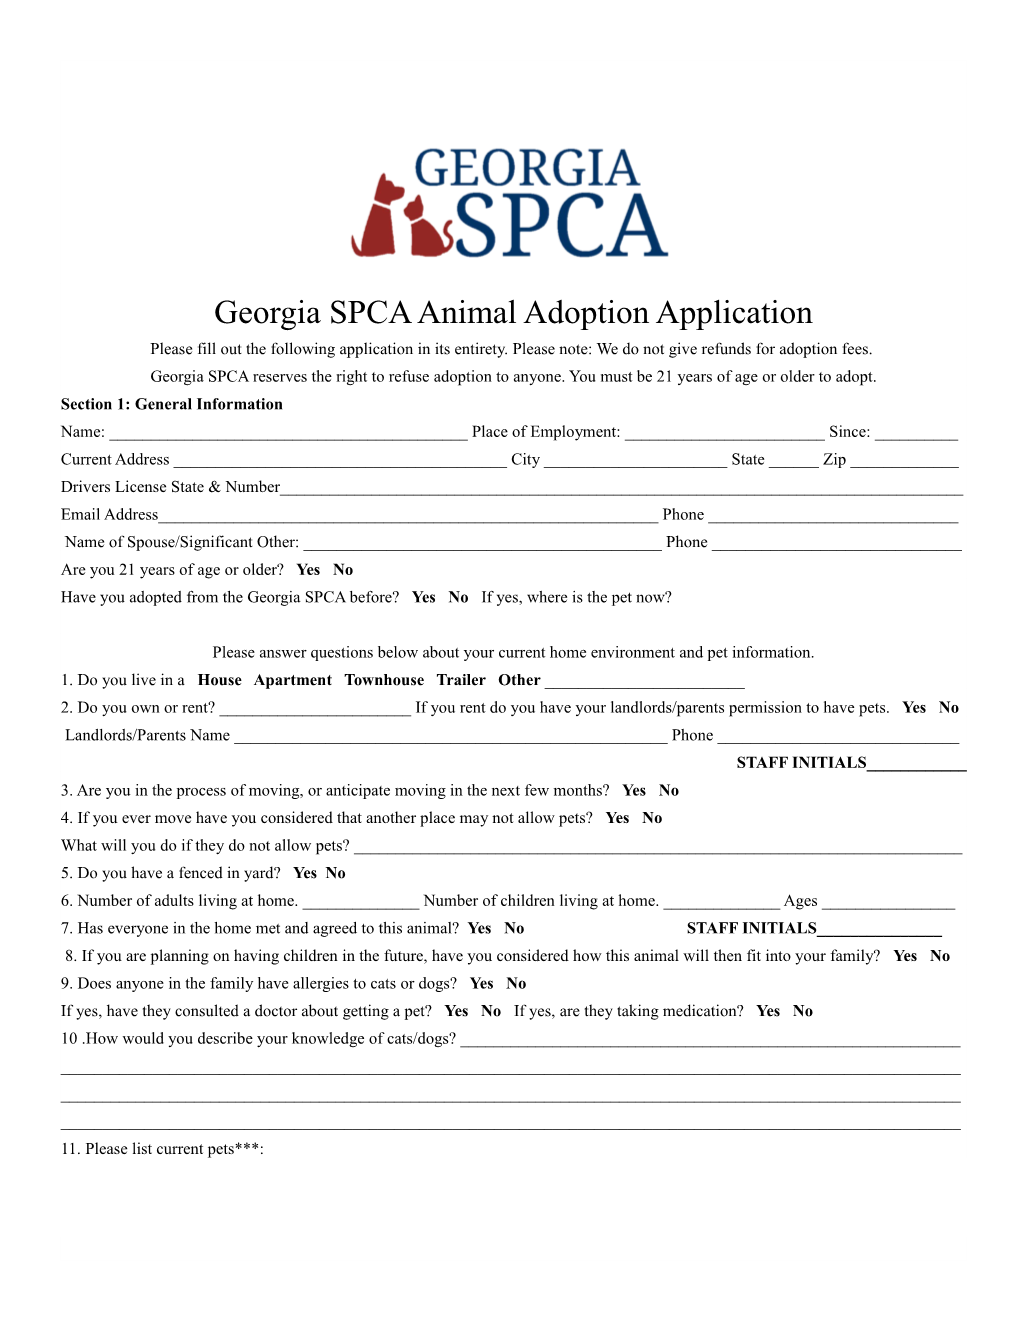 Georgia SPCA Animal Adoption Application